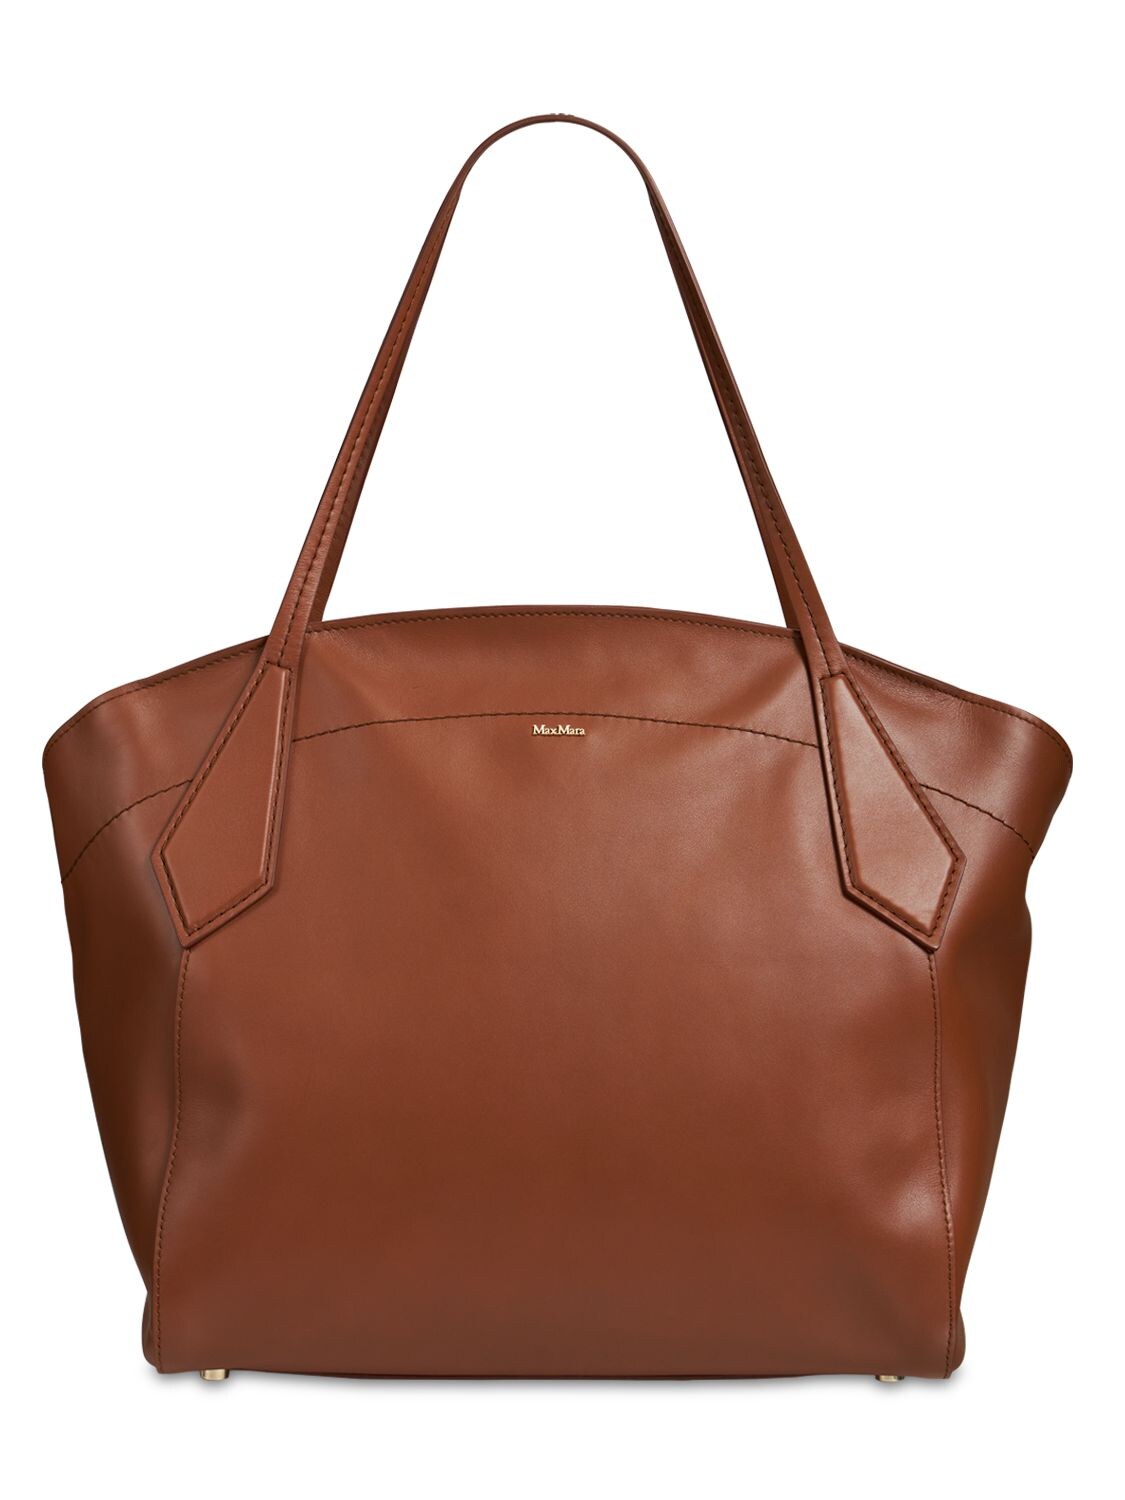 MAX MARA Bags for Women | ModeSens